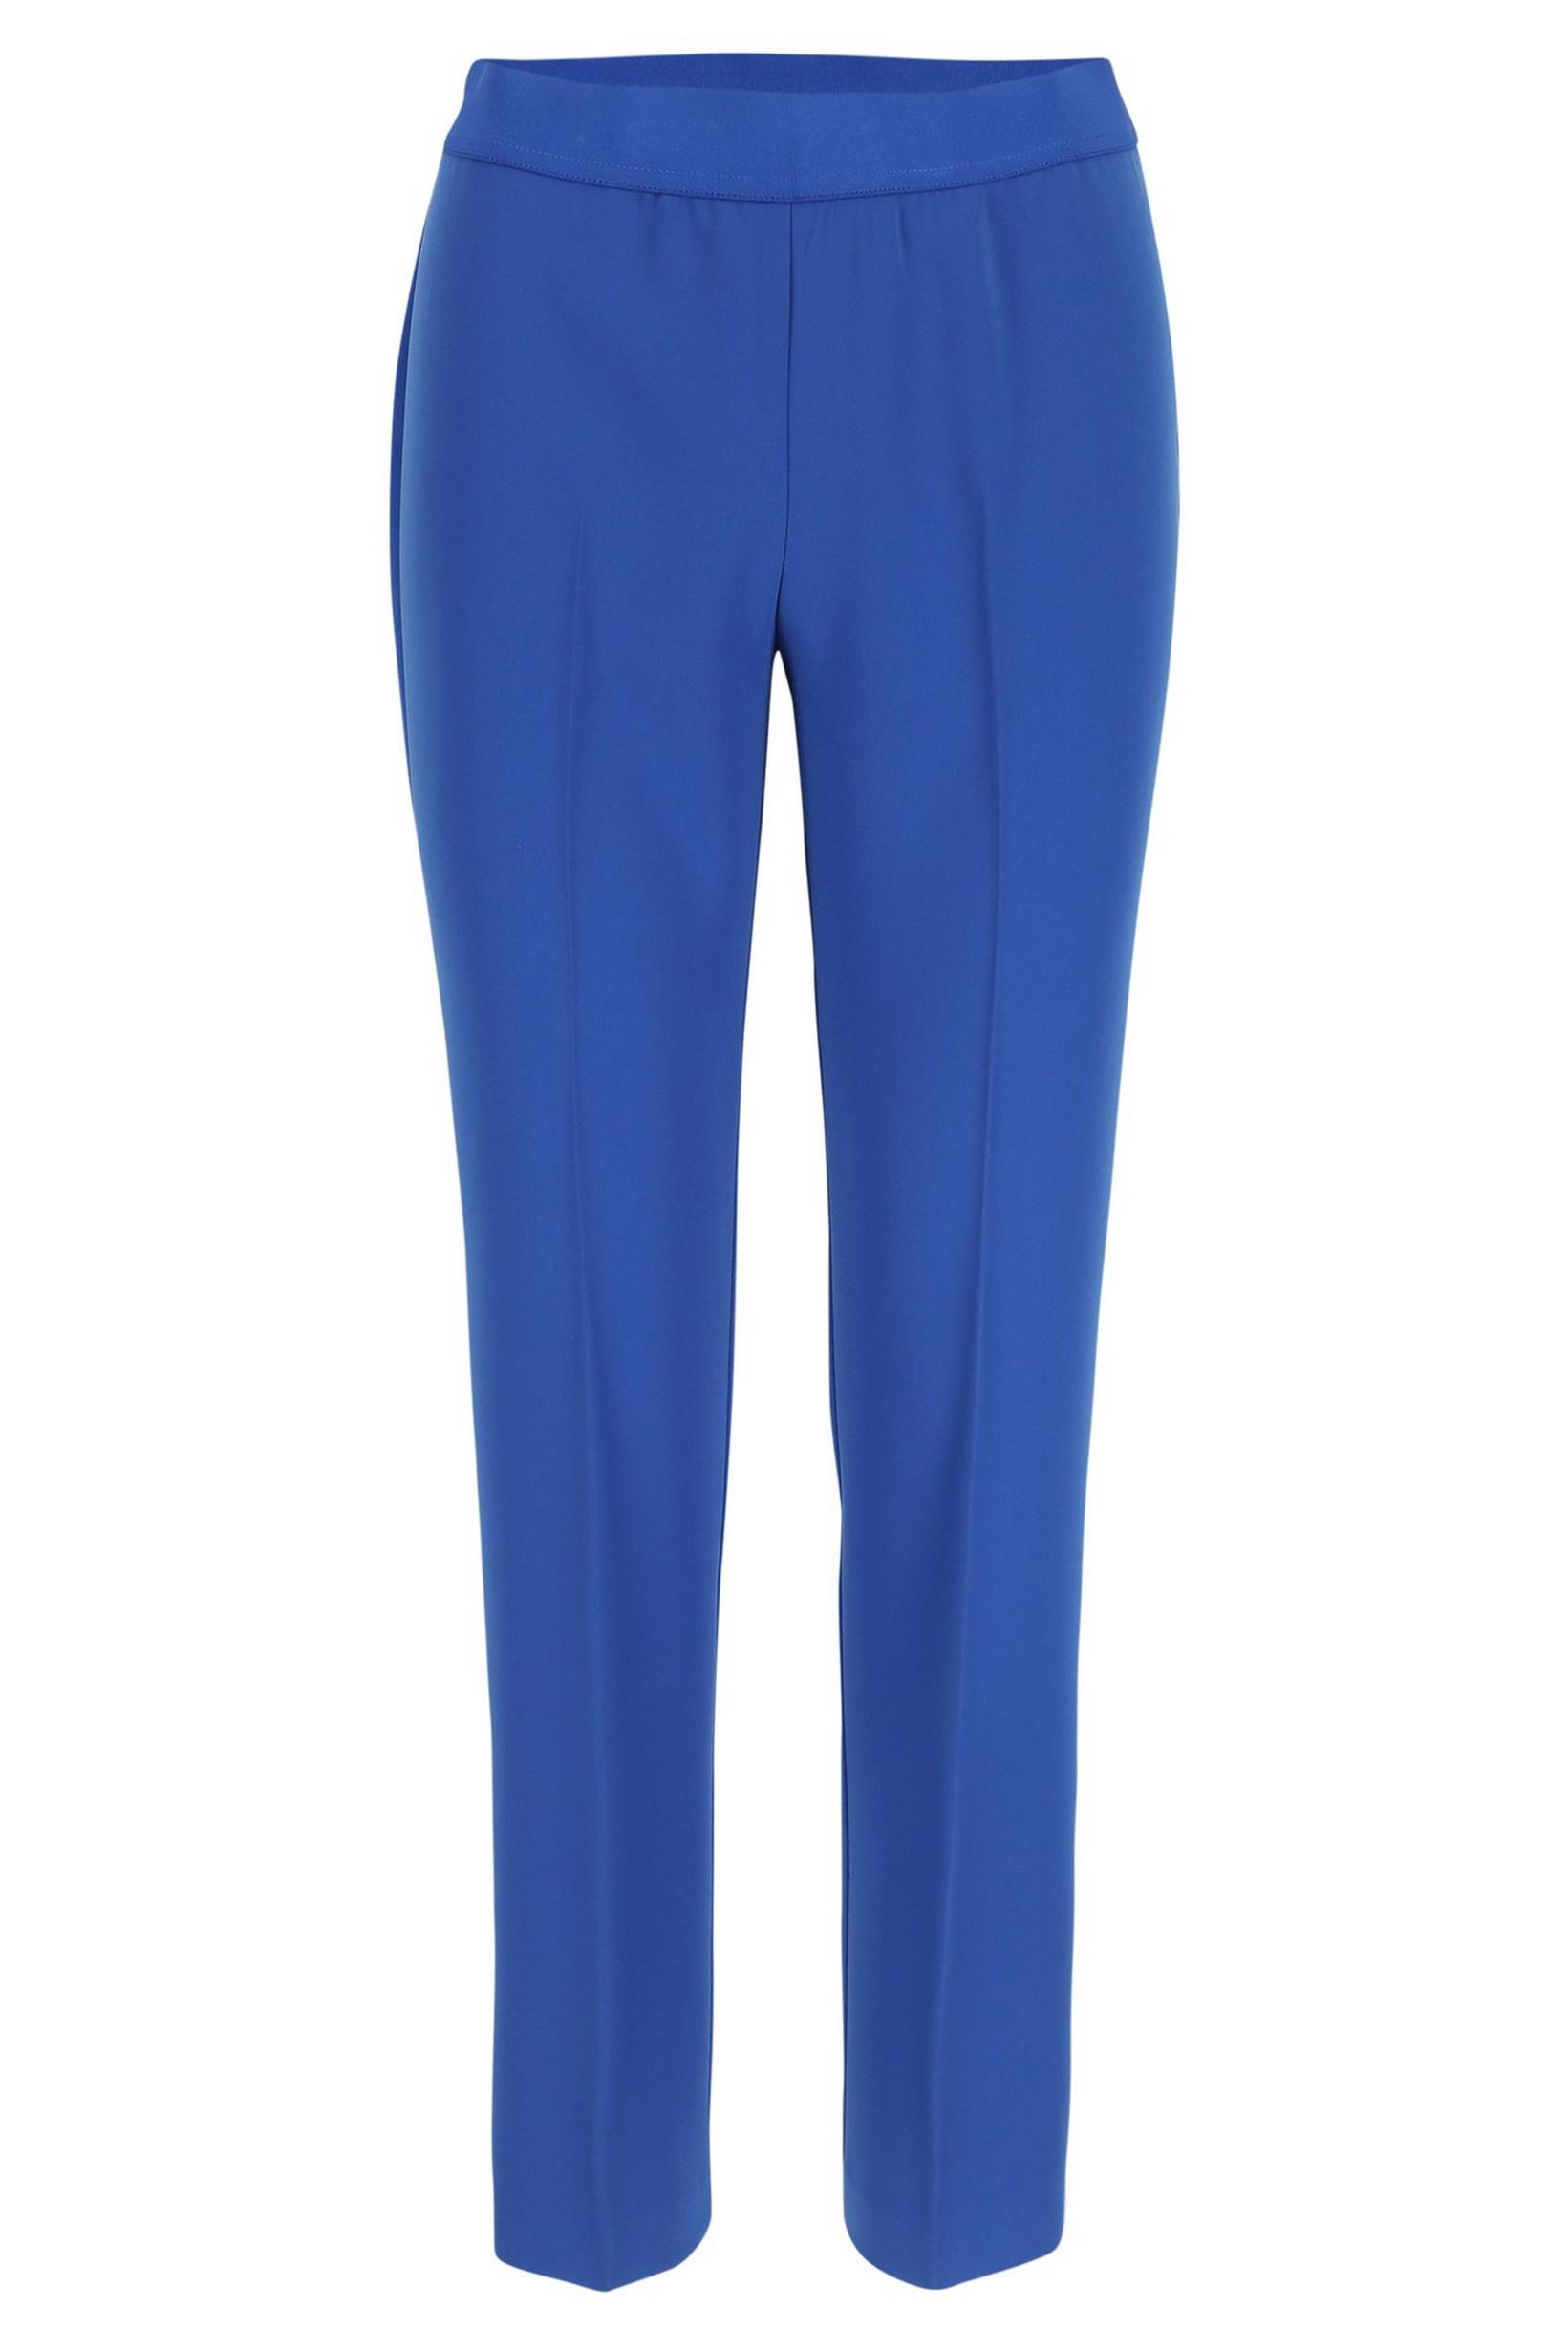 Broek Blauw Mayerline ( X-Cadox 8000/060 ) - Delaere Womenswear